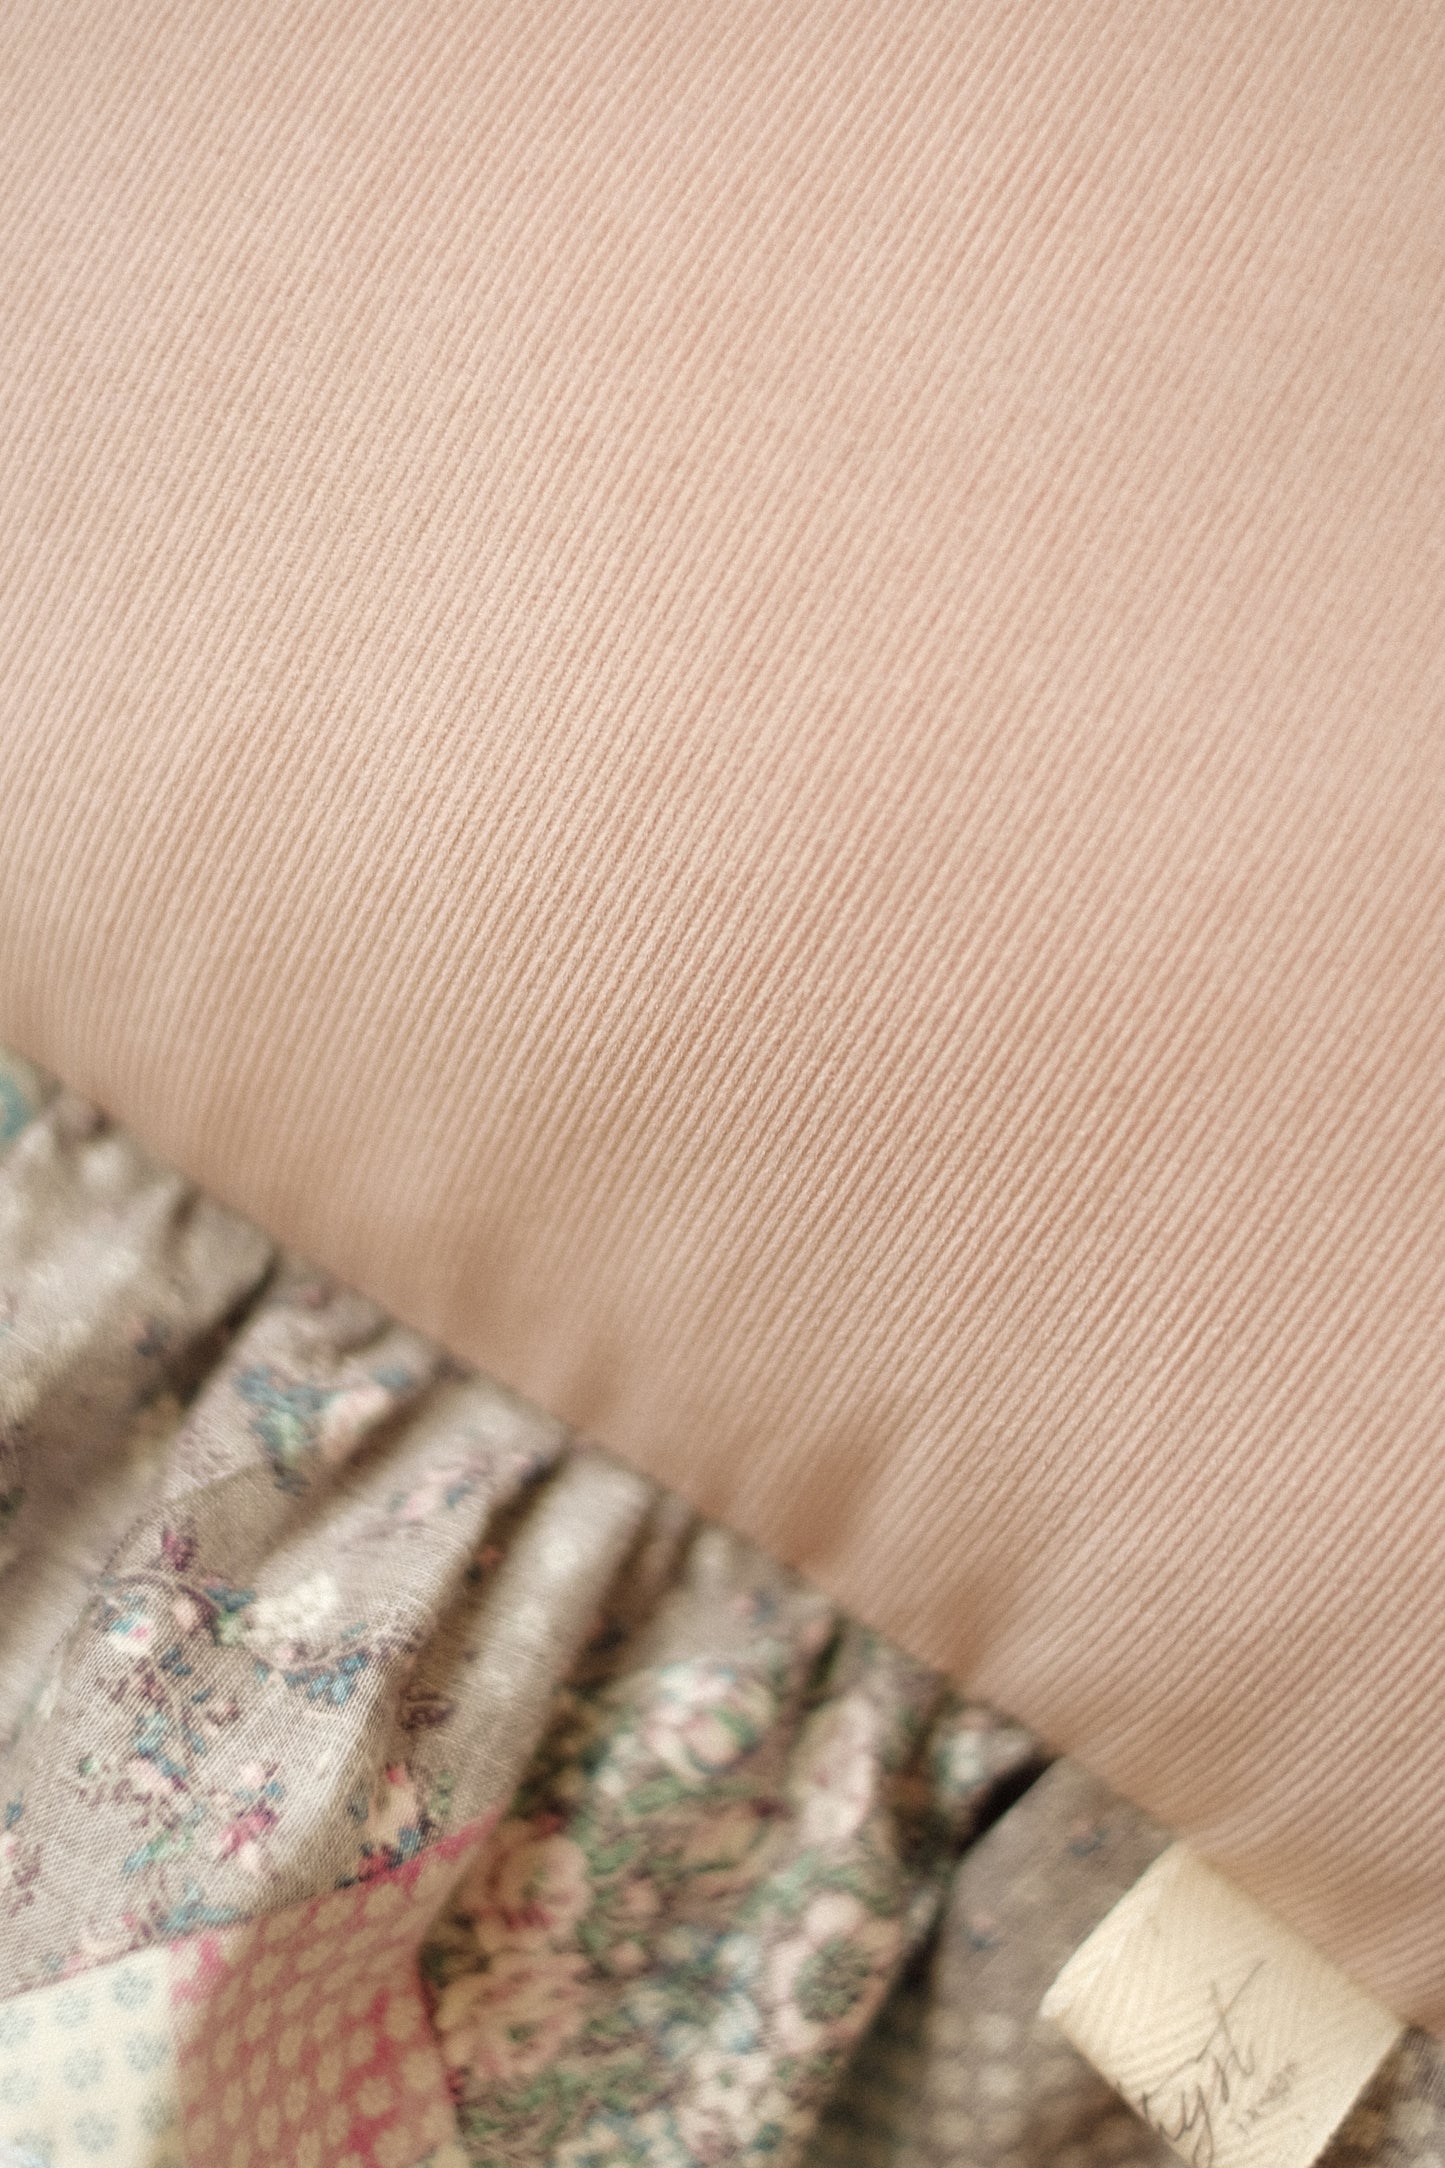 Handmade ruffled heart pillow - Granny's quilt♡